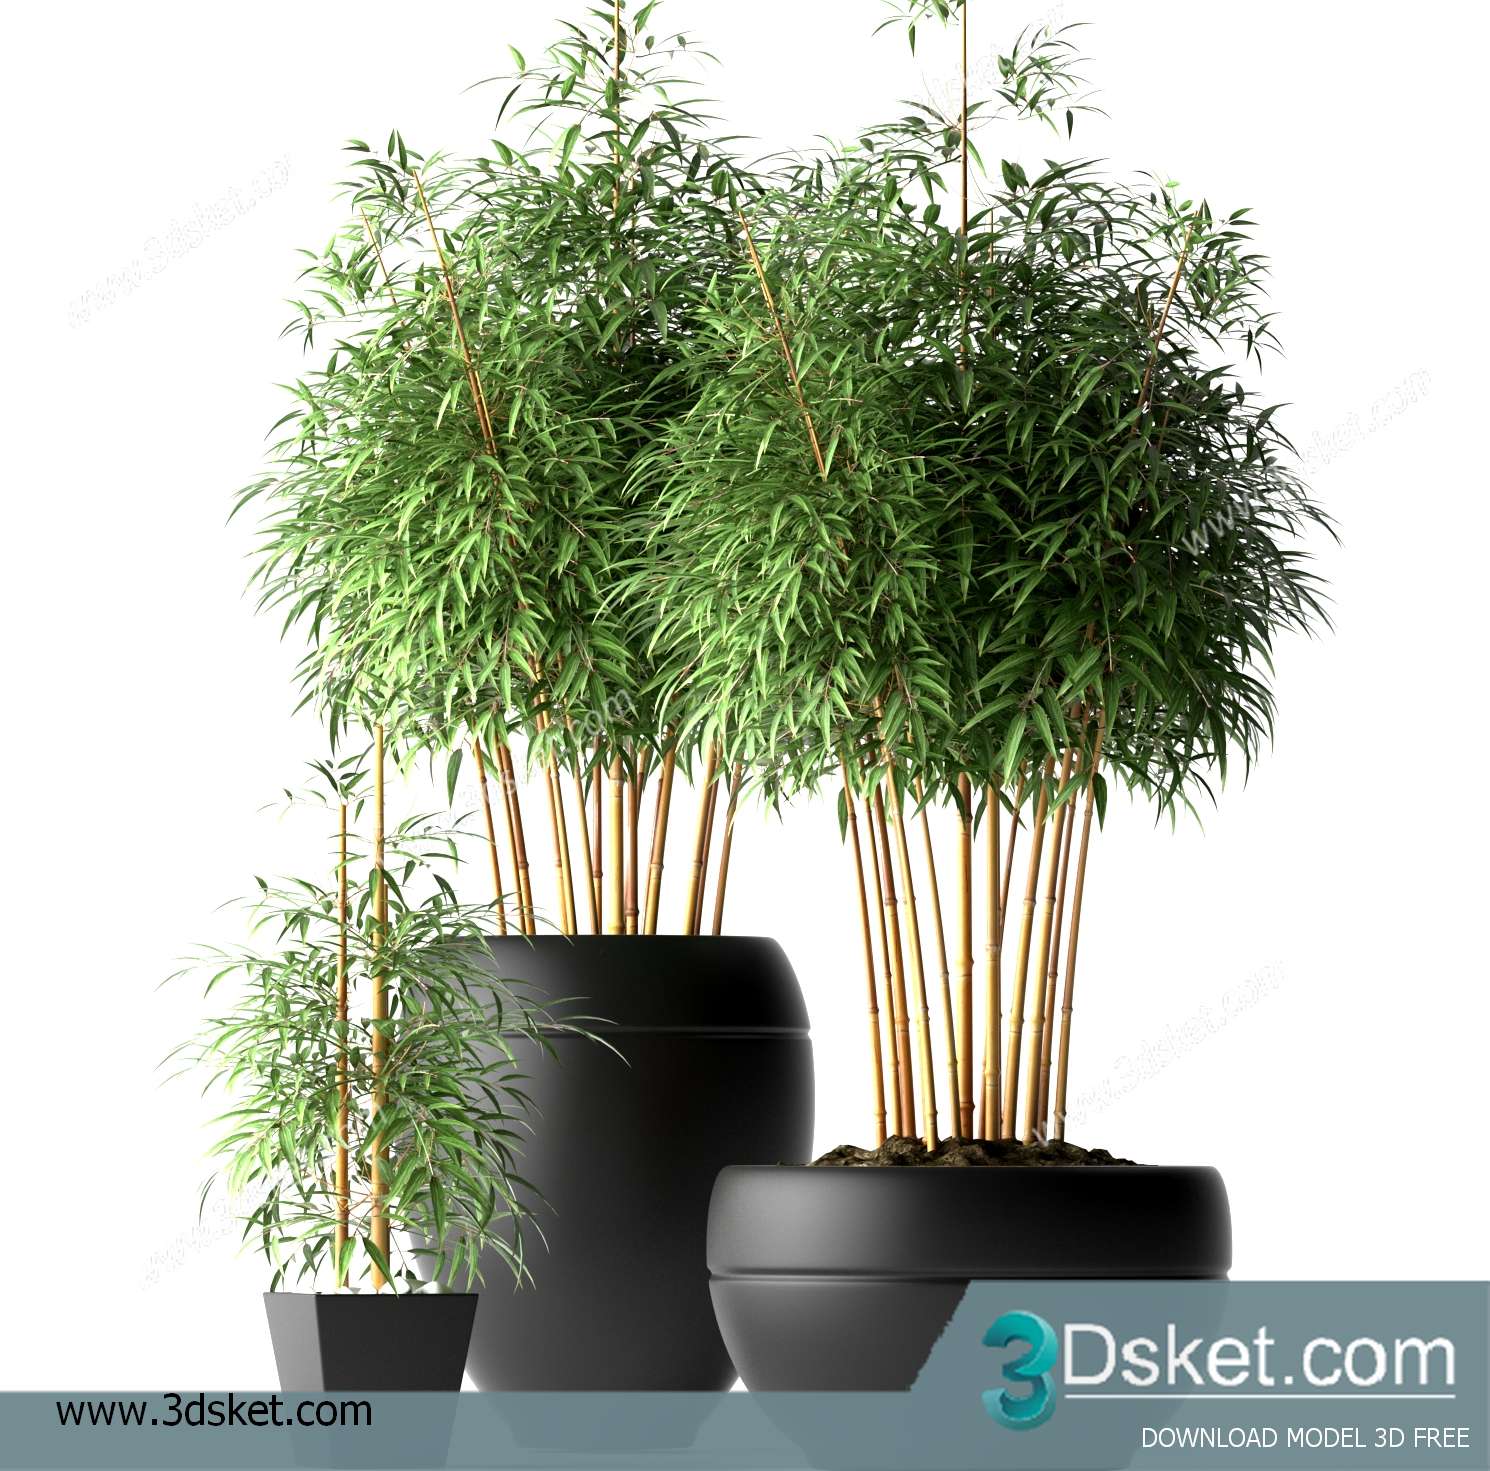 3D Model Plant Free Download 0246